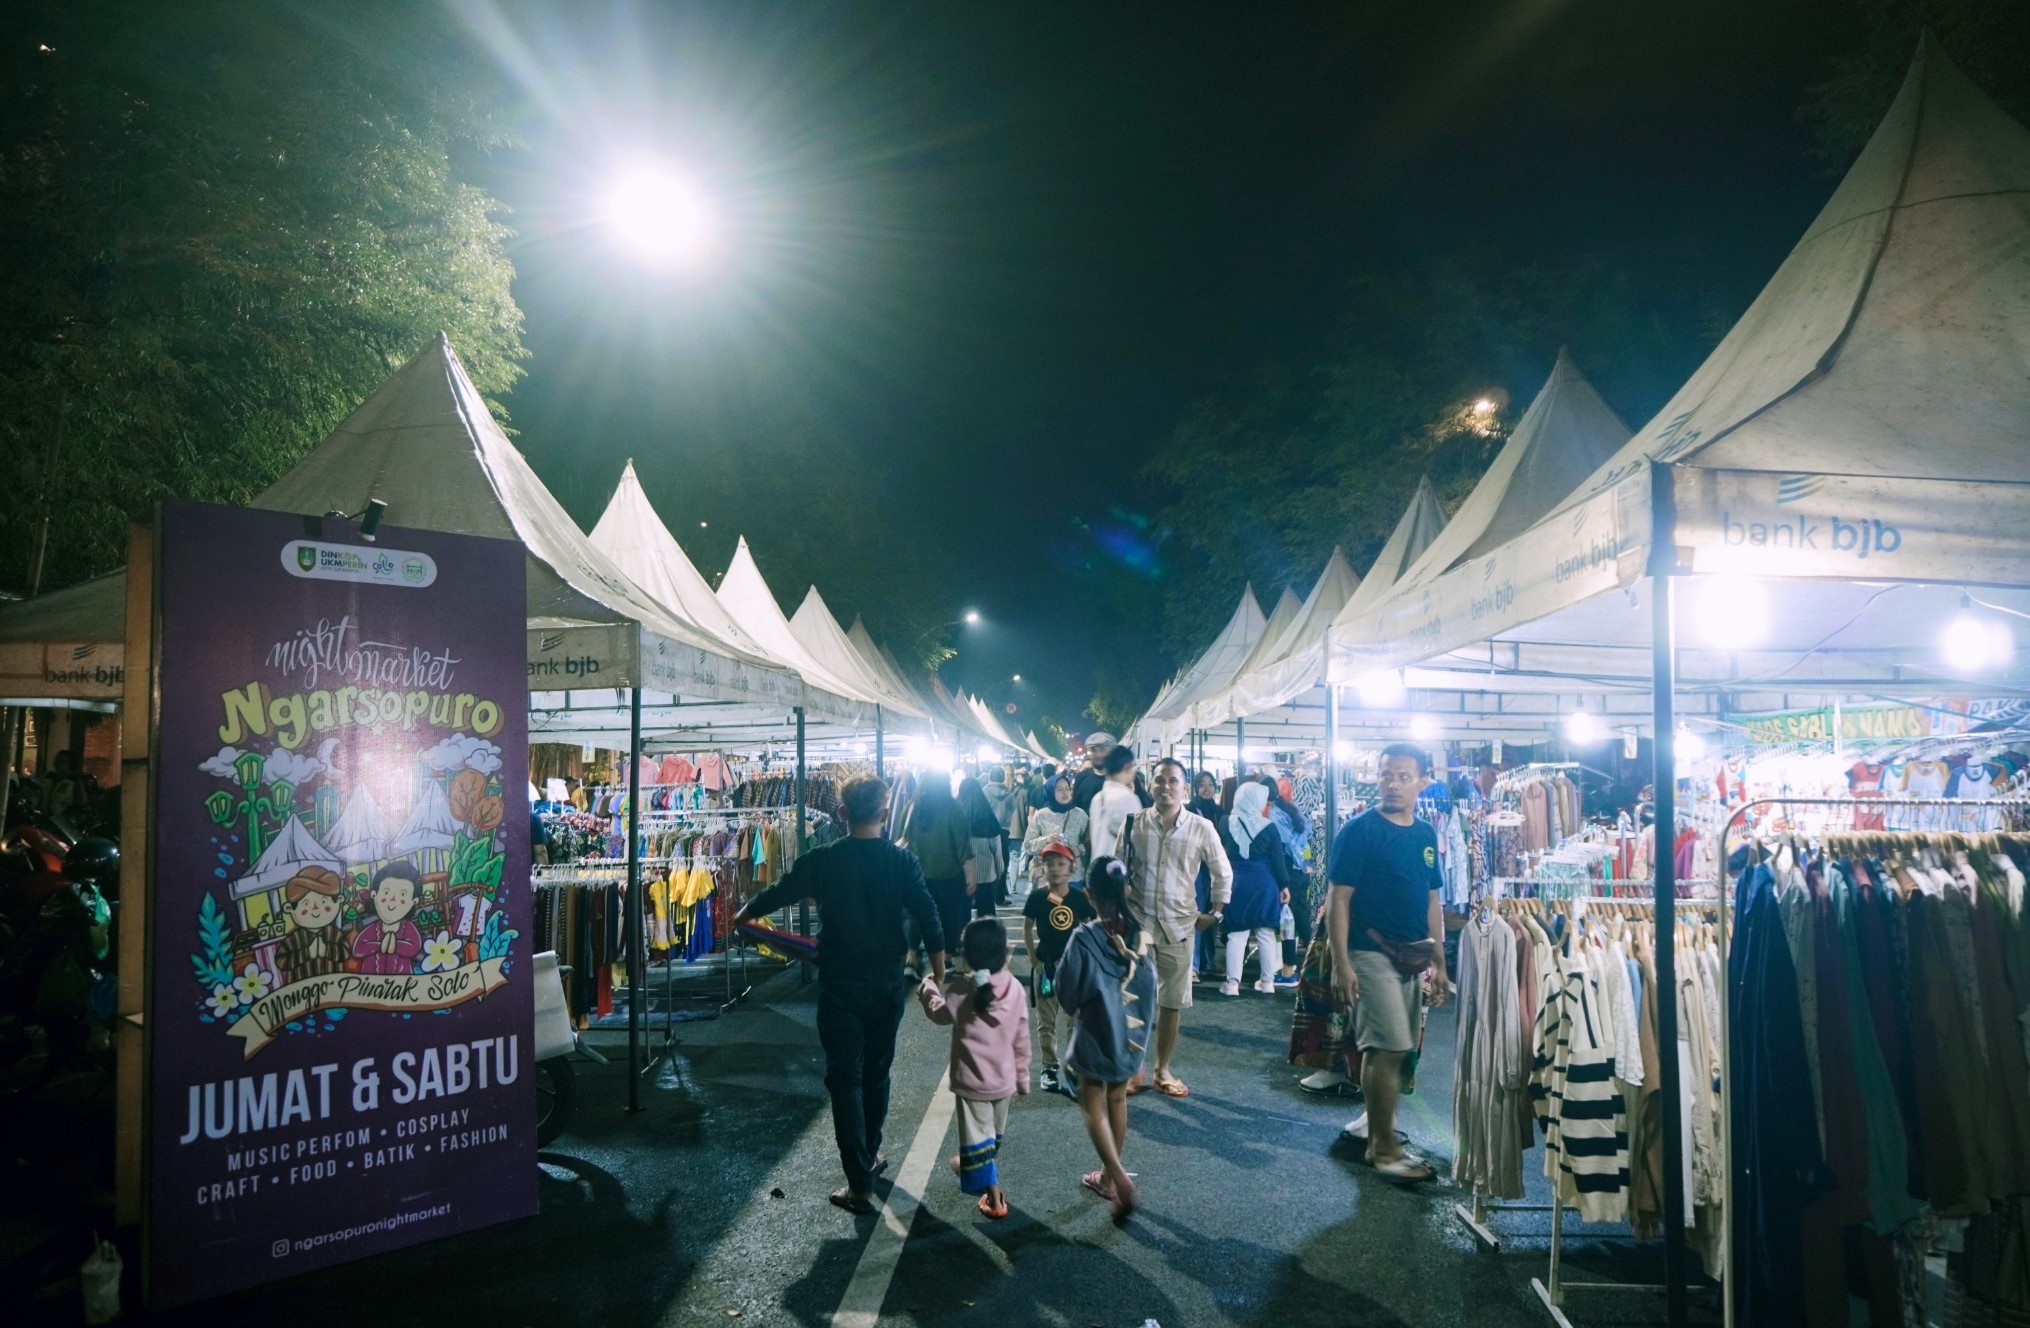 Night Market Solo di daerah Ngarsopuro depan Pura Mangkunegaran